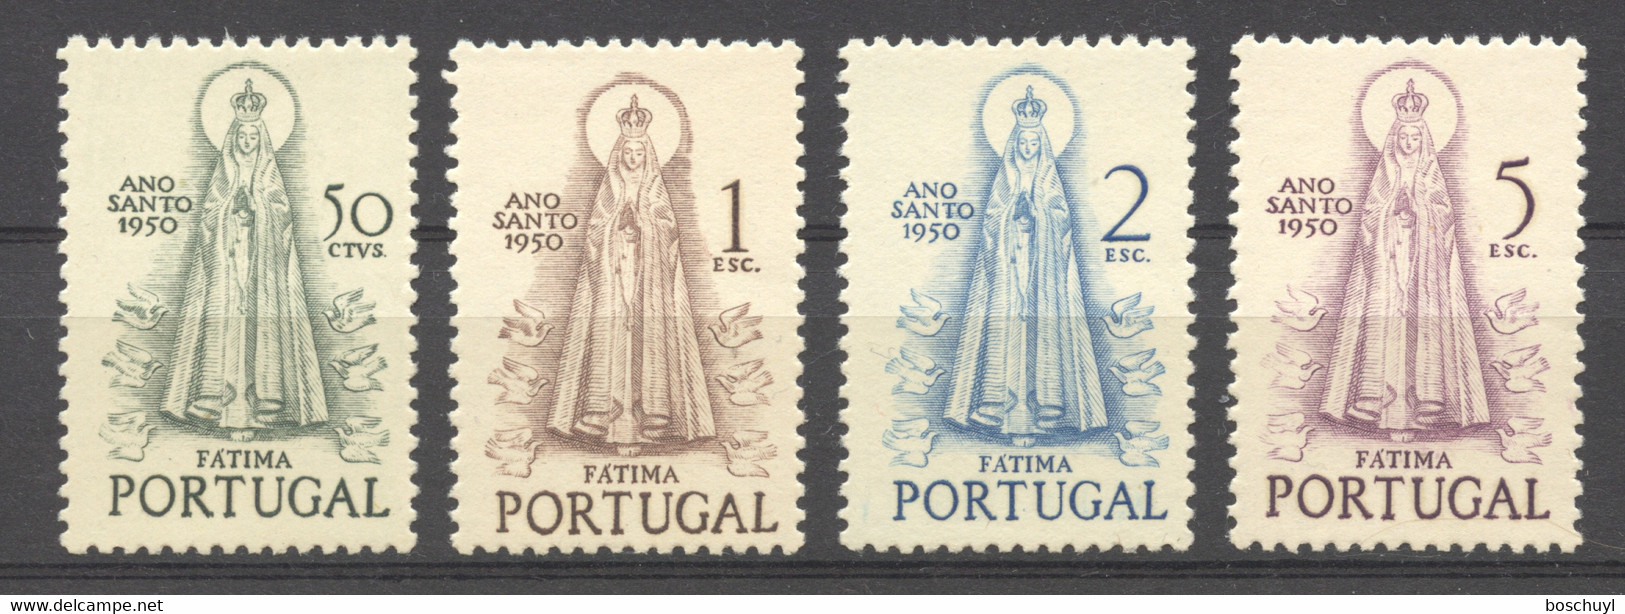 Portugal, 1950, Holy Year, Virgin In Fatima, MNH, Michel 748-751 - Neufs